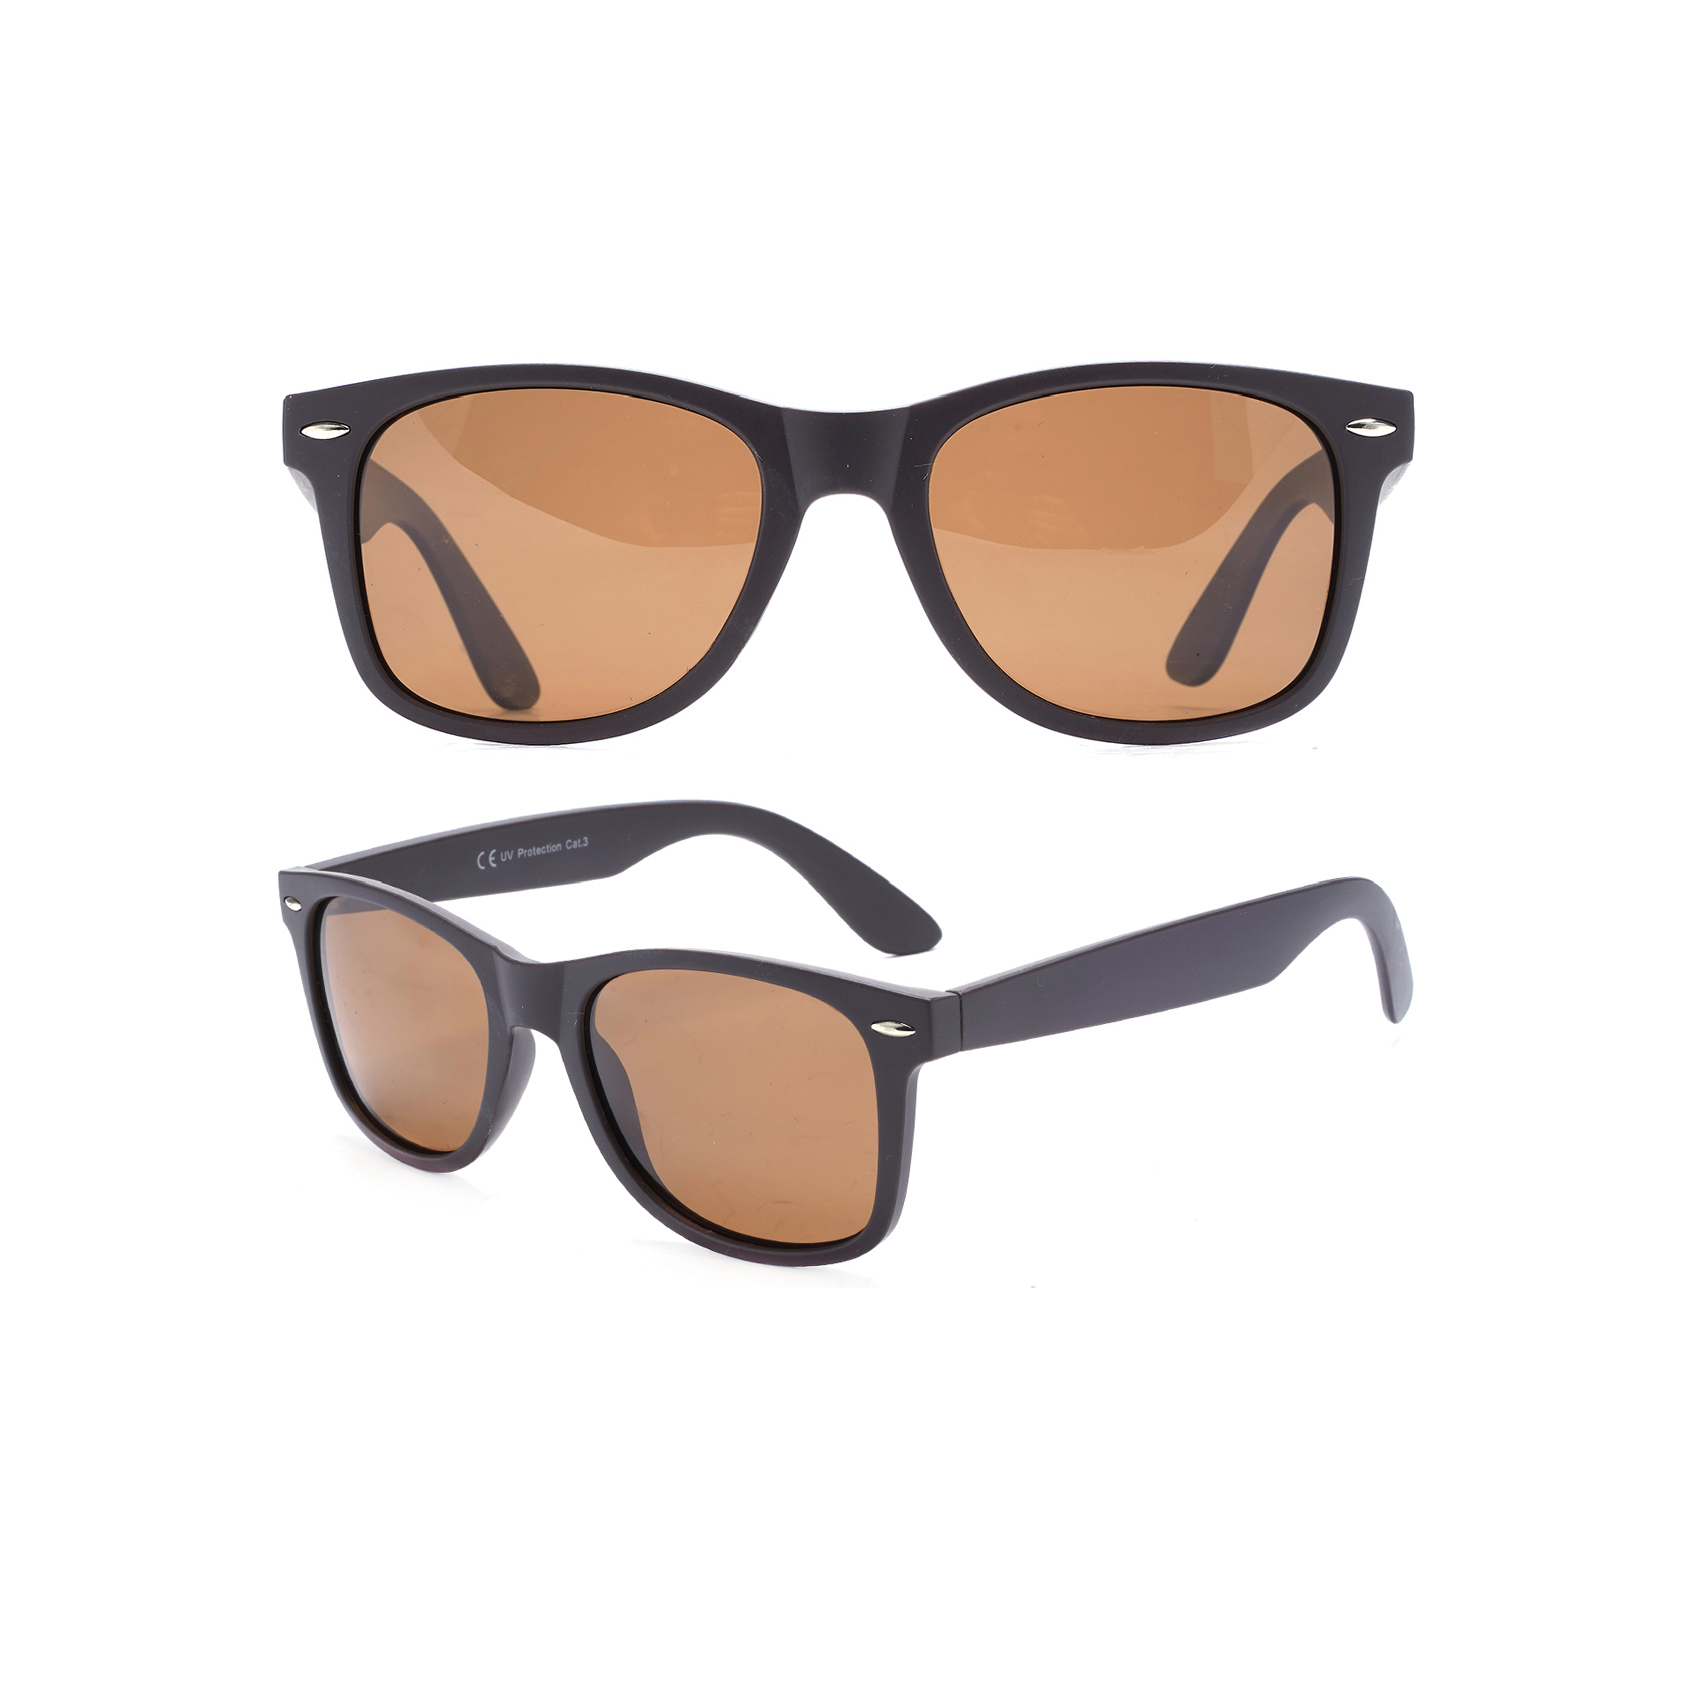 Retro Inspired Black Frame Brown Mirrored Wayfarer Sunglasses Best Sunglasses Manufacturer in China